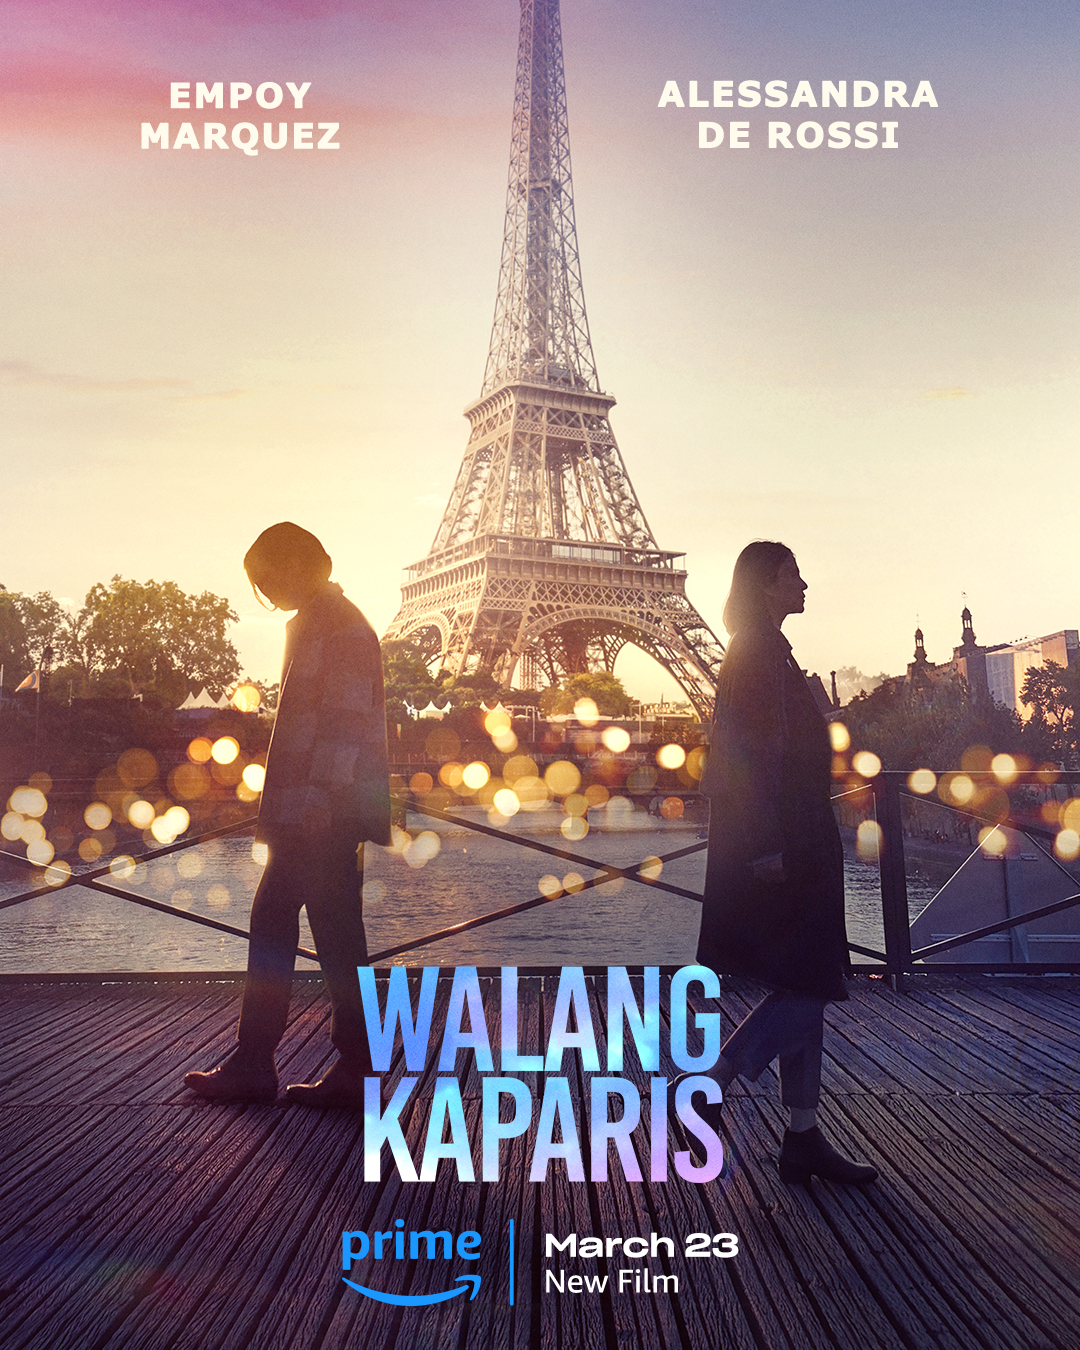 Alessandra De Rossi and Empoy Marquez Reunite for Amazon Original Movie "Walang KaParis" Streaming March 23, 2023